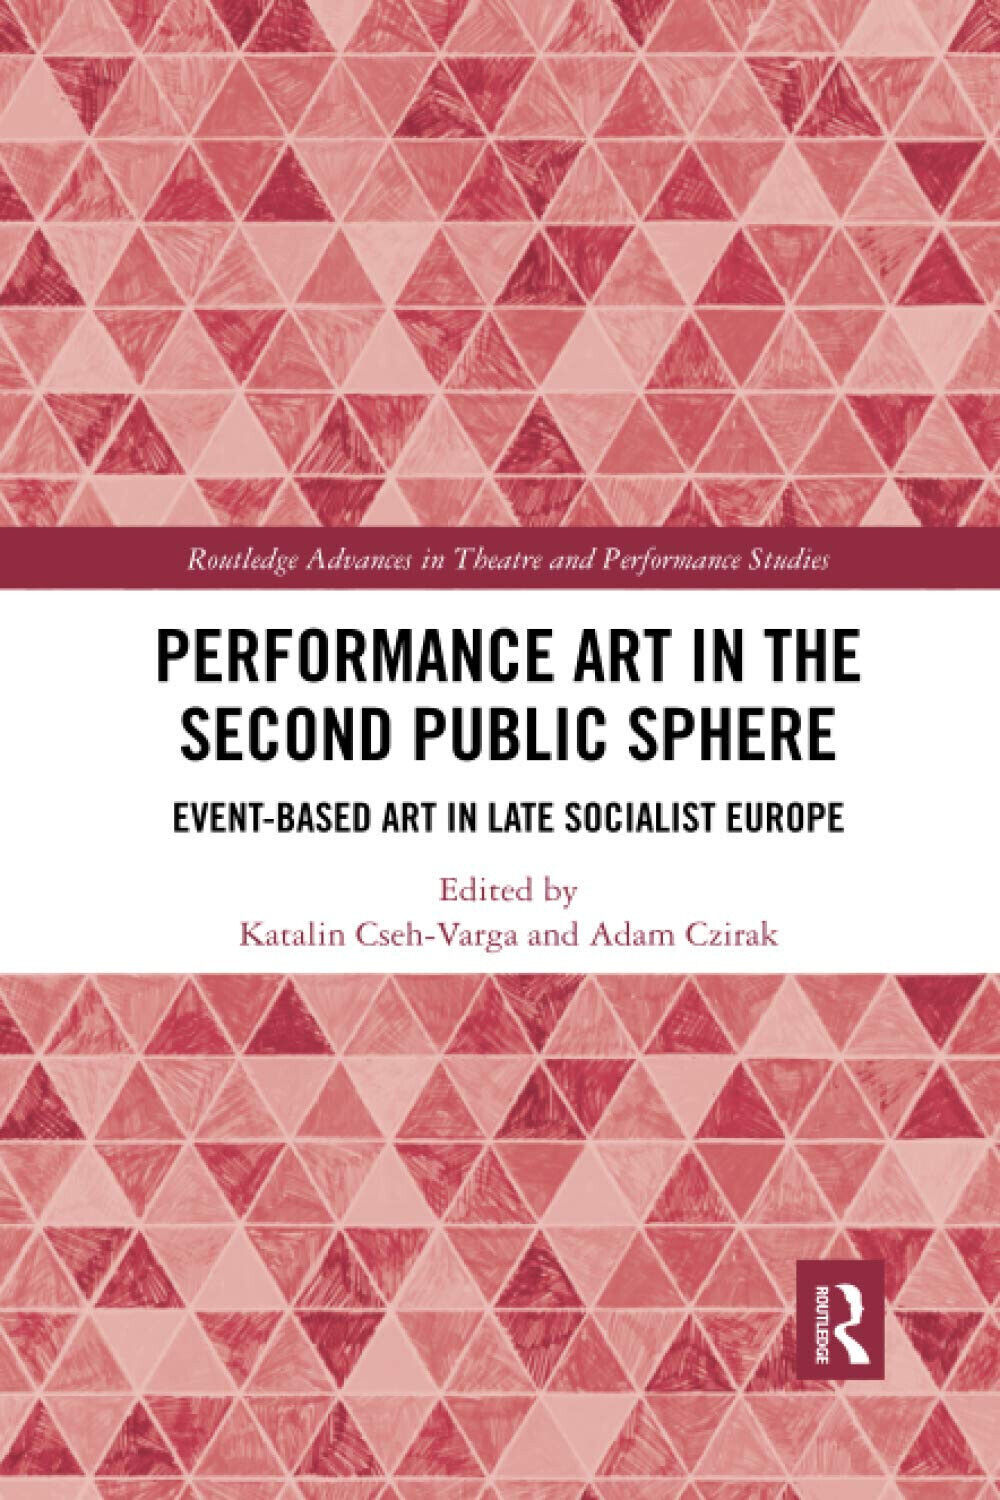 Performance Art In The Second Public Sphere - Katalin Cseh-Varga - 2020